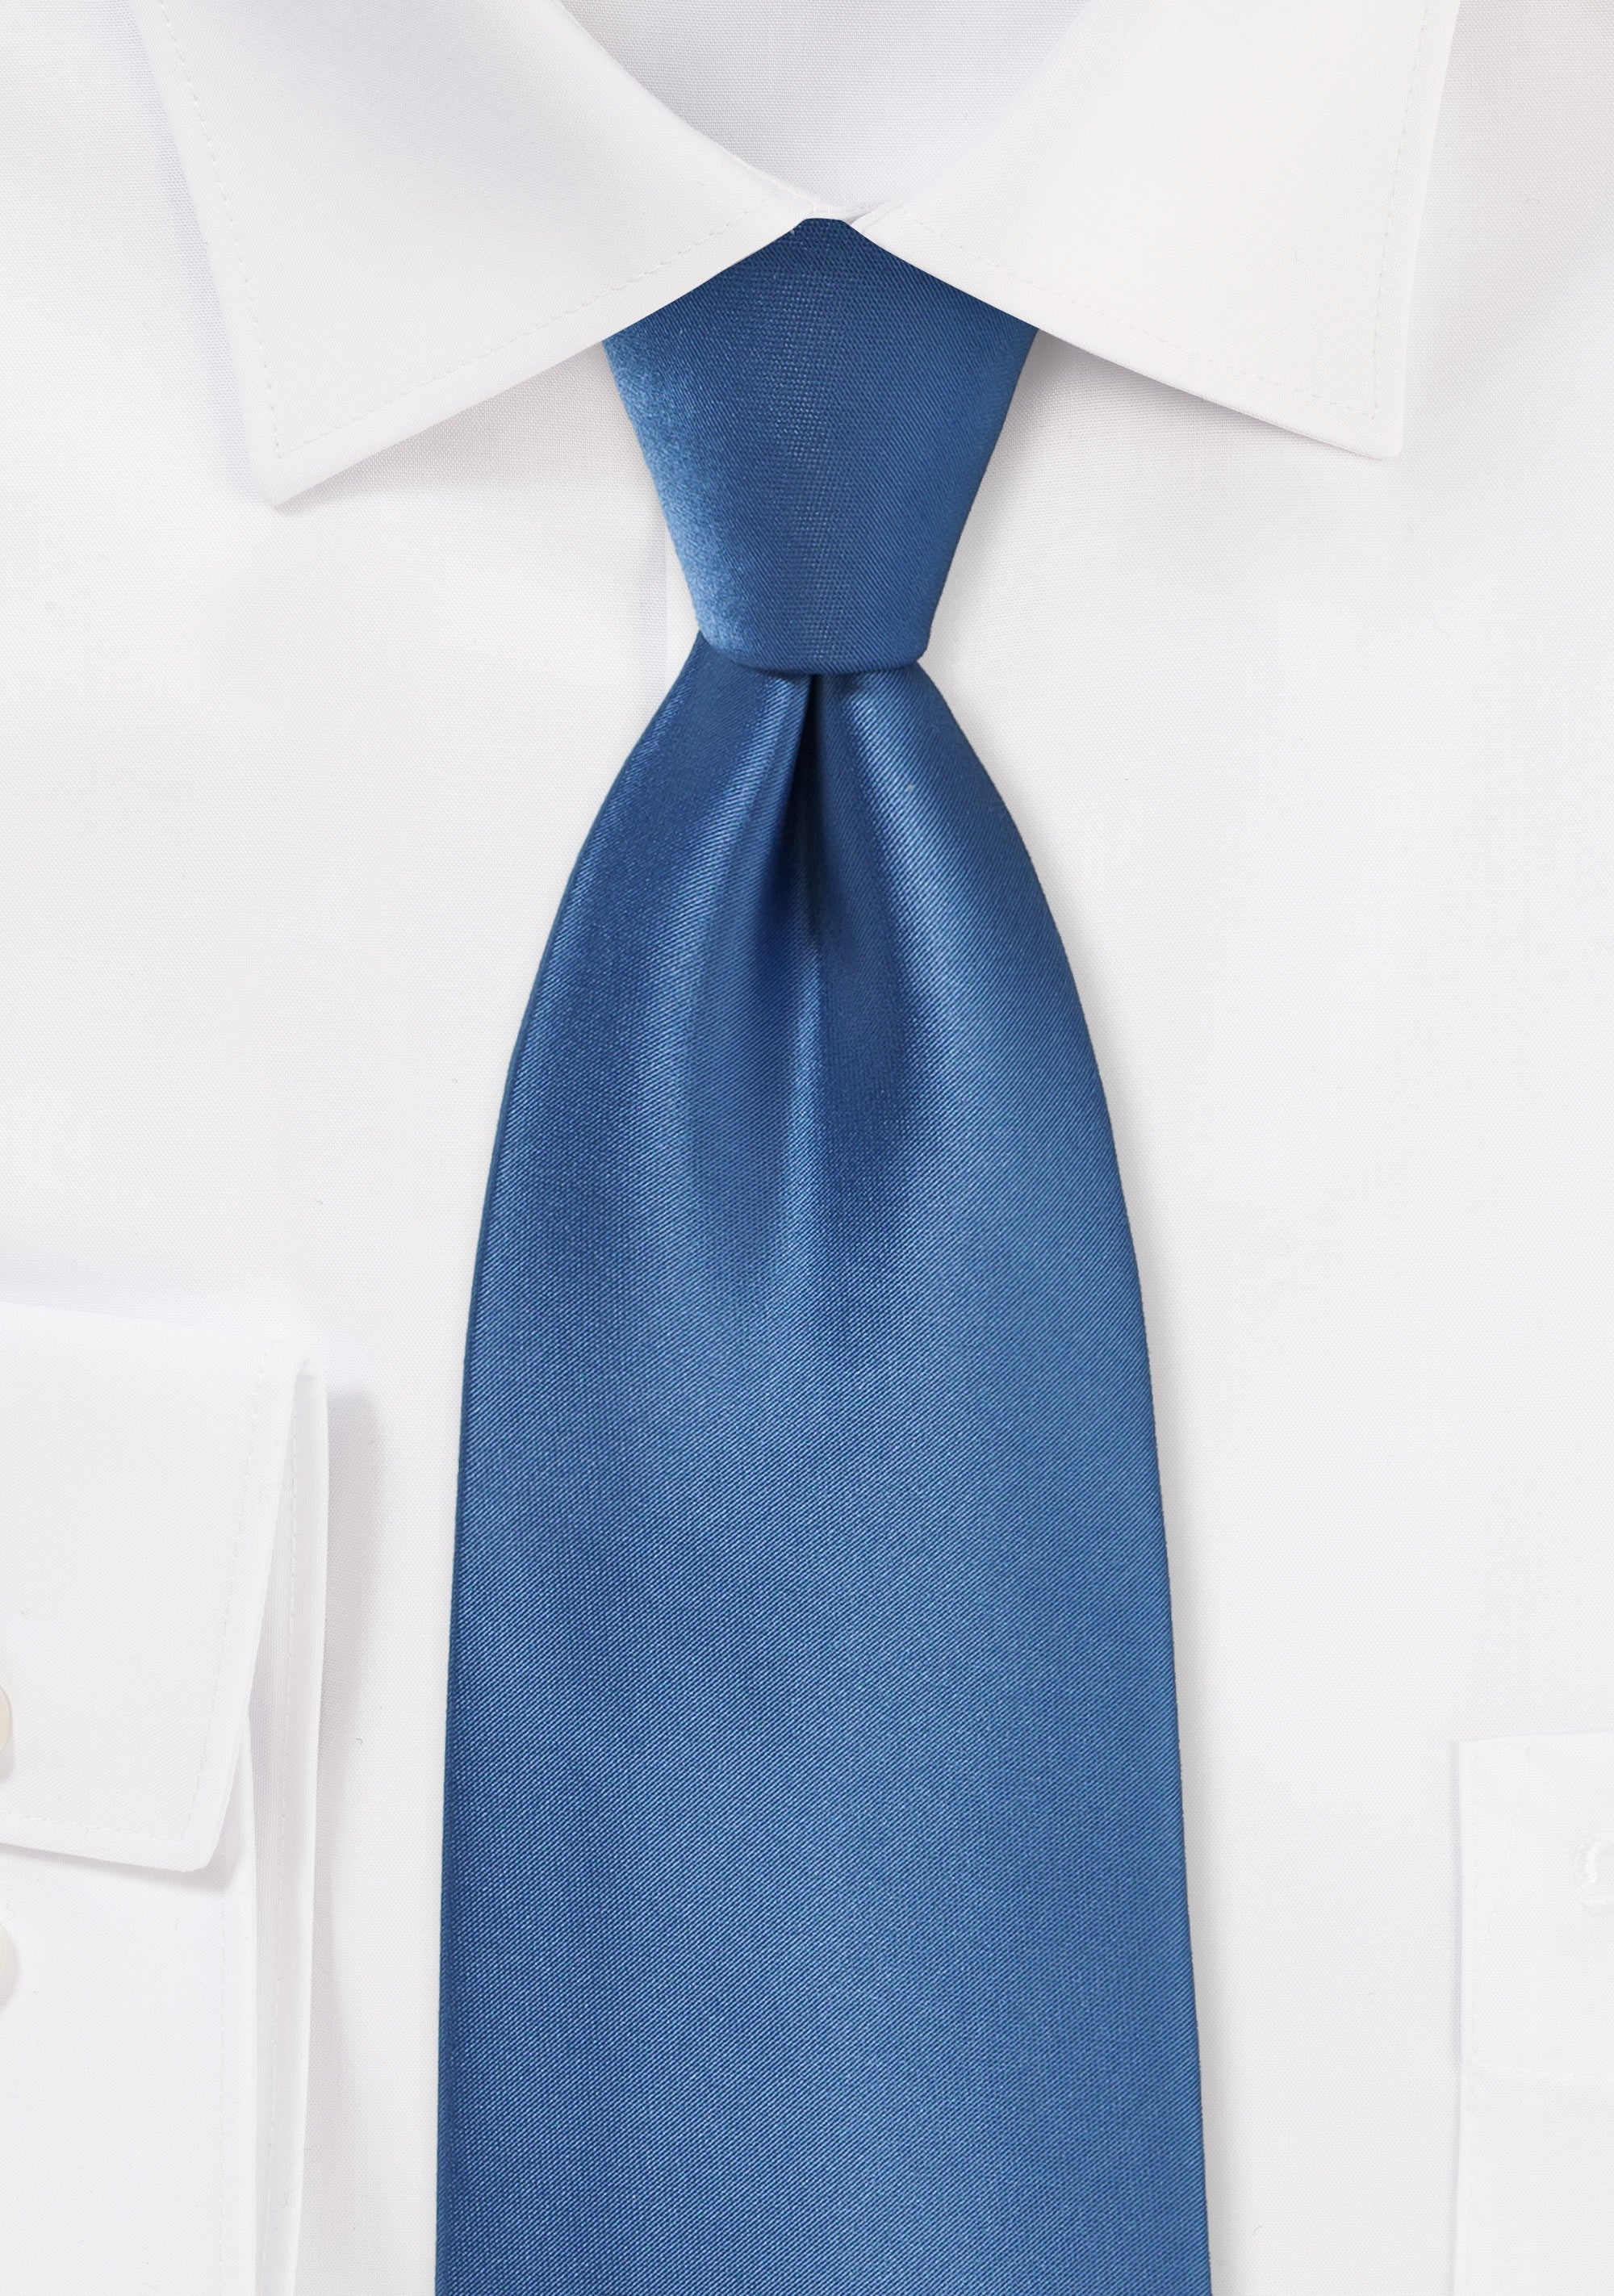 Steel Blue Solid Necktie